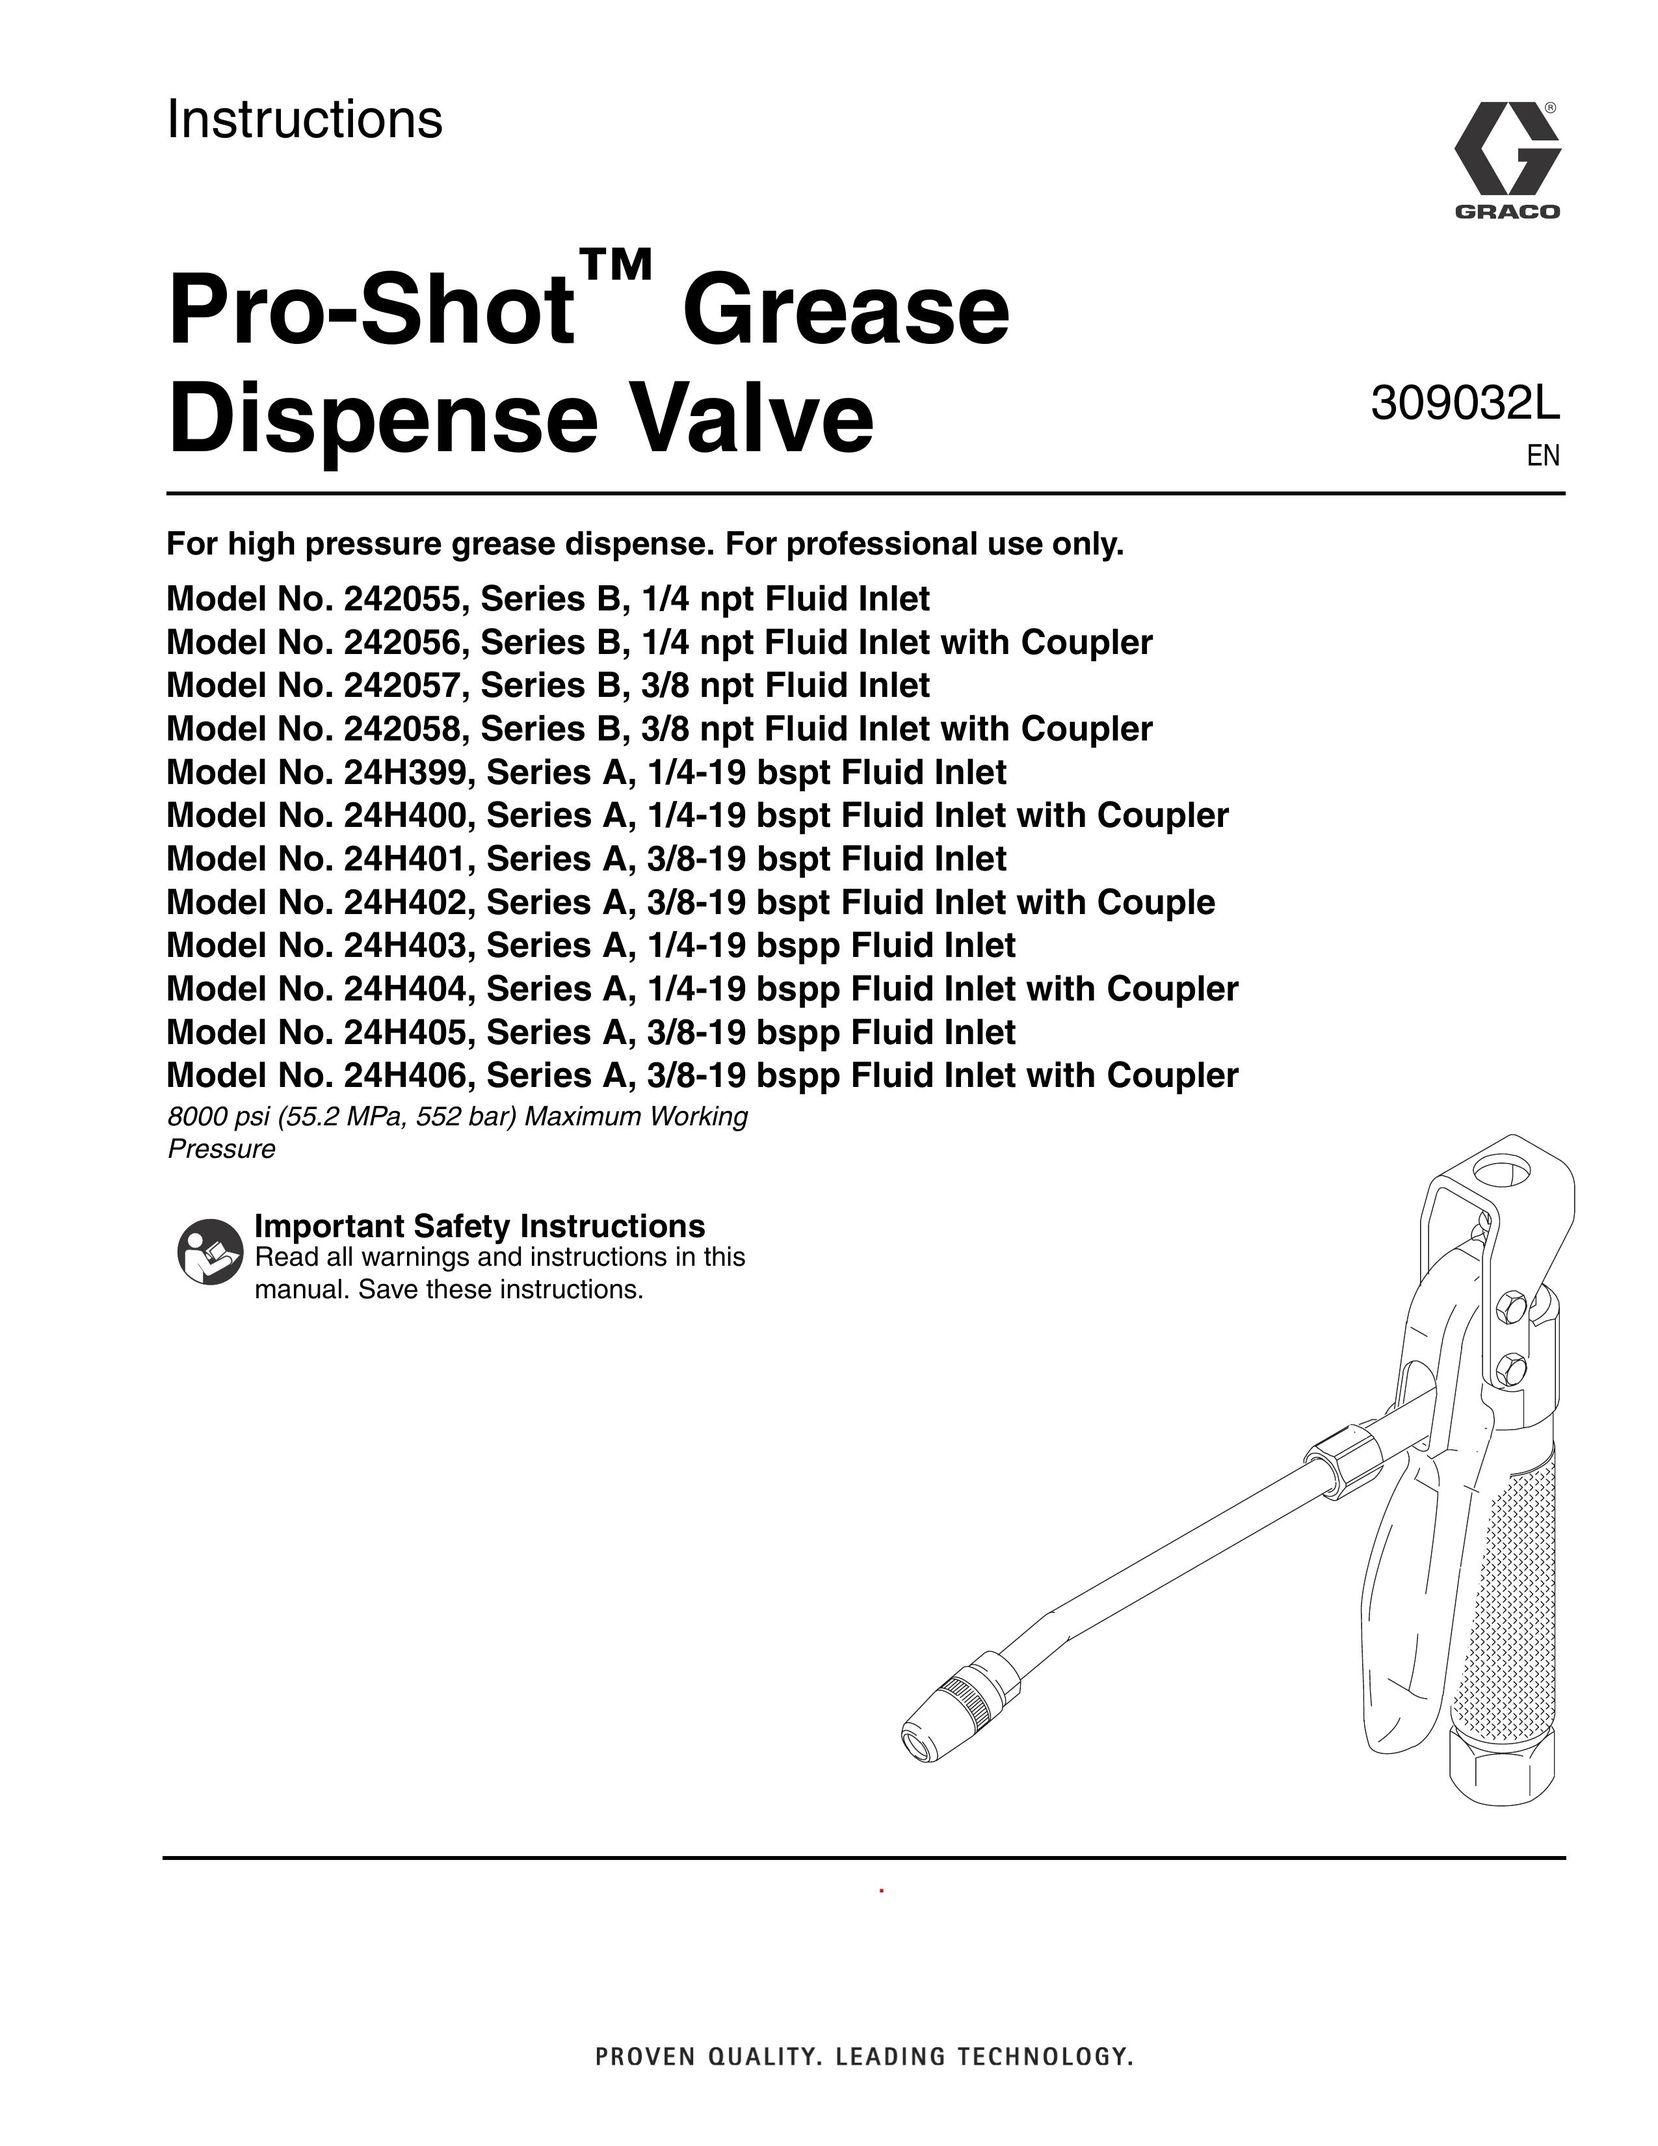 Graco 24H400 Glue Gun User Manual